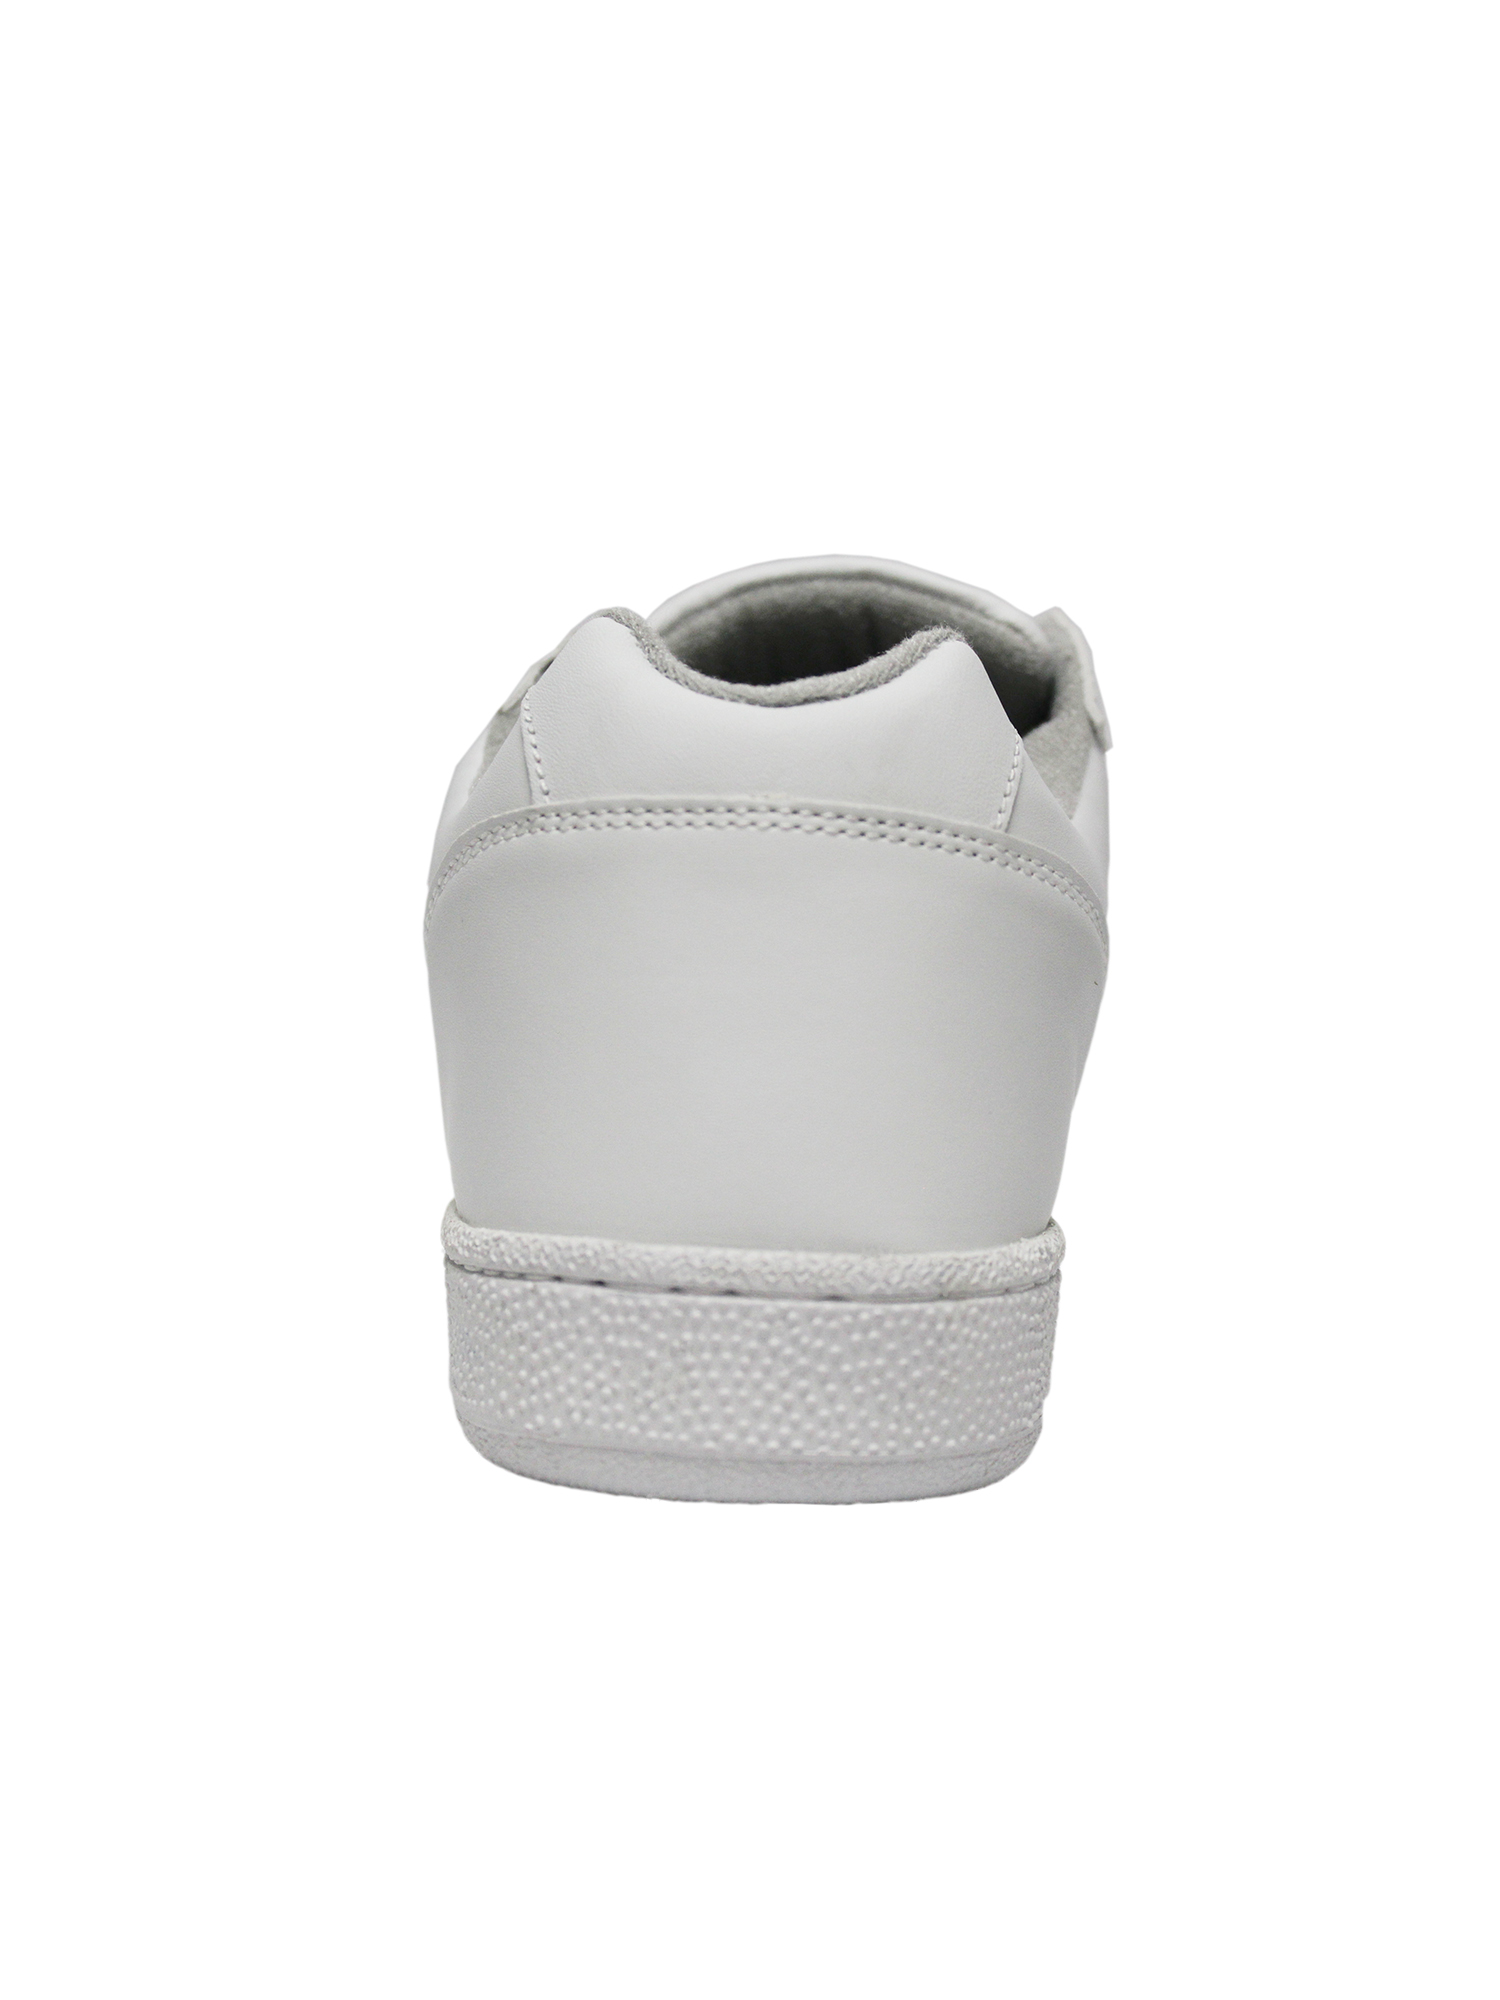 Tanleewa Men's Leather Strap Sneakers Lightweight Hook and Loop Walking Shoe Size 6.5 Adult Male - image 5 of 5